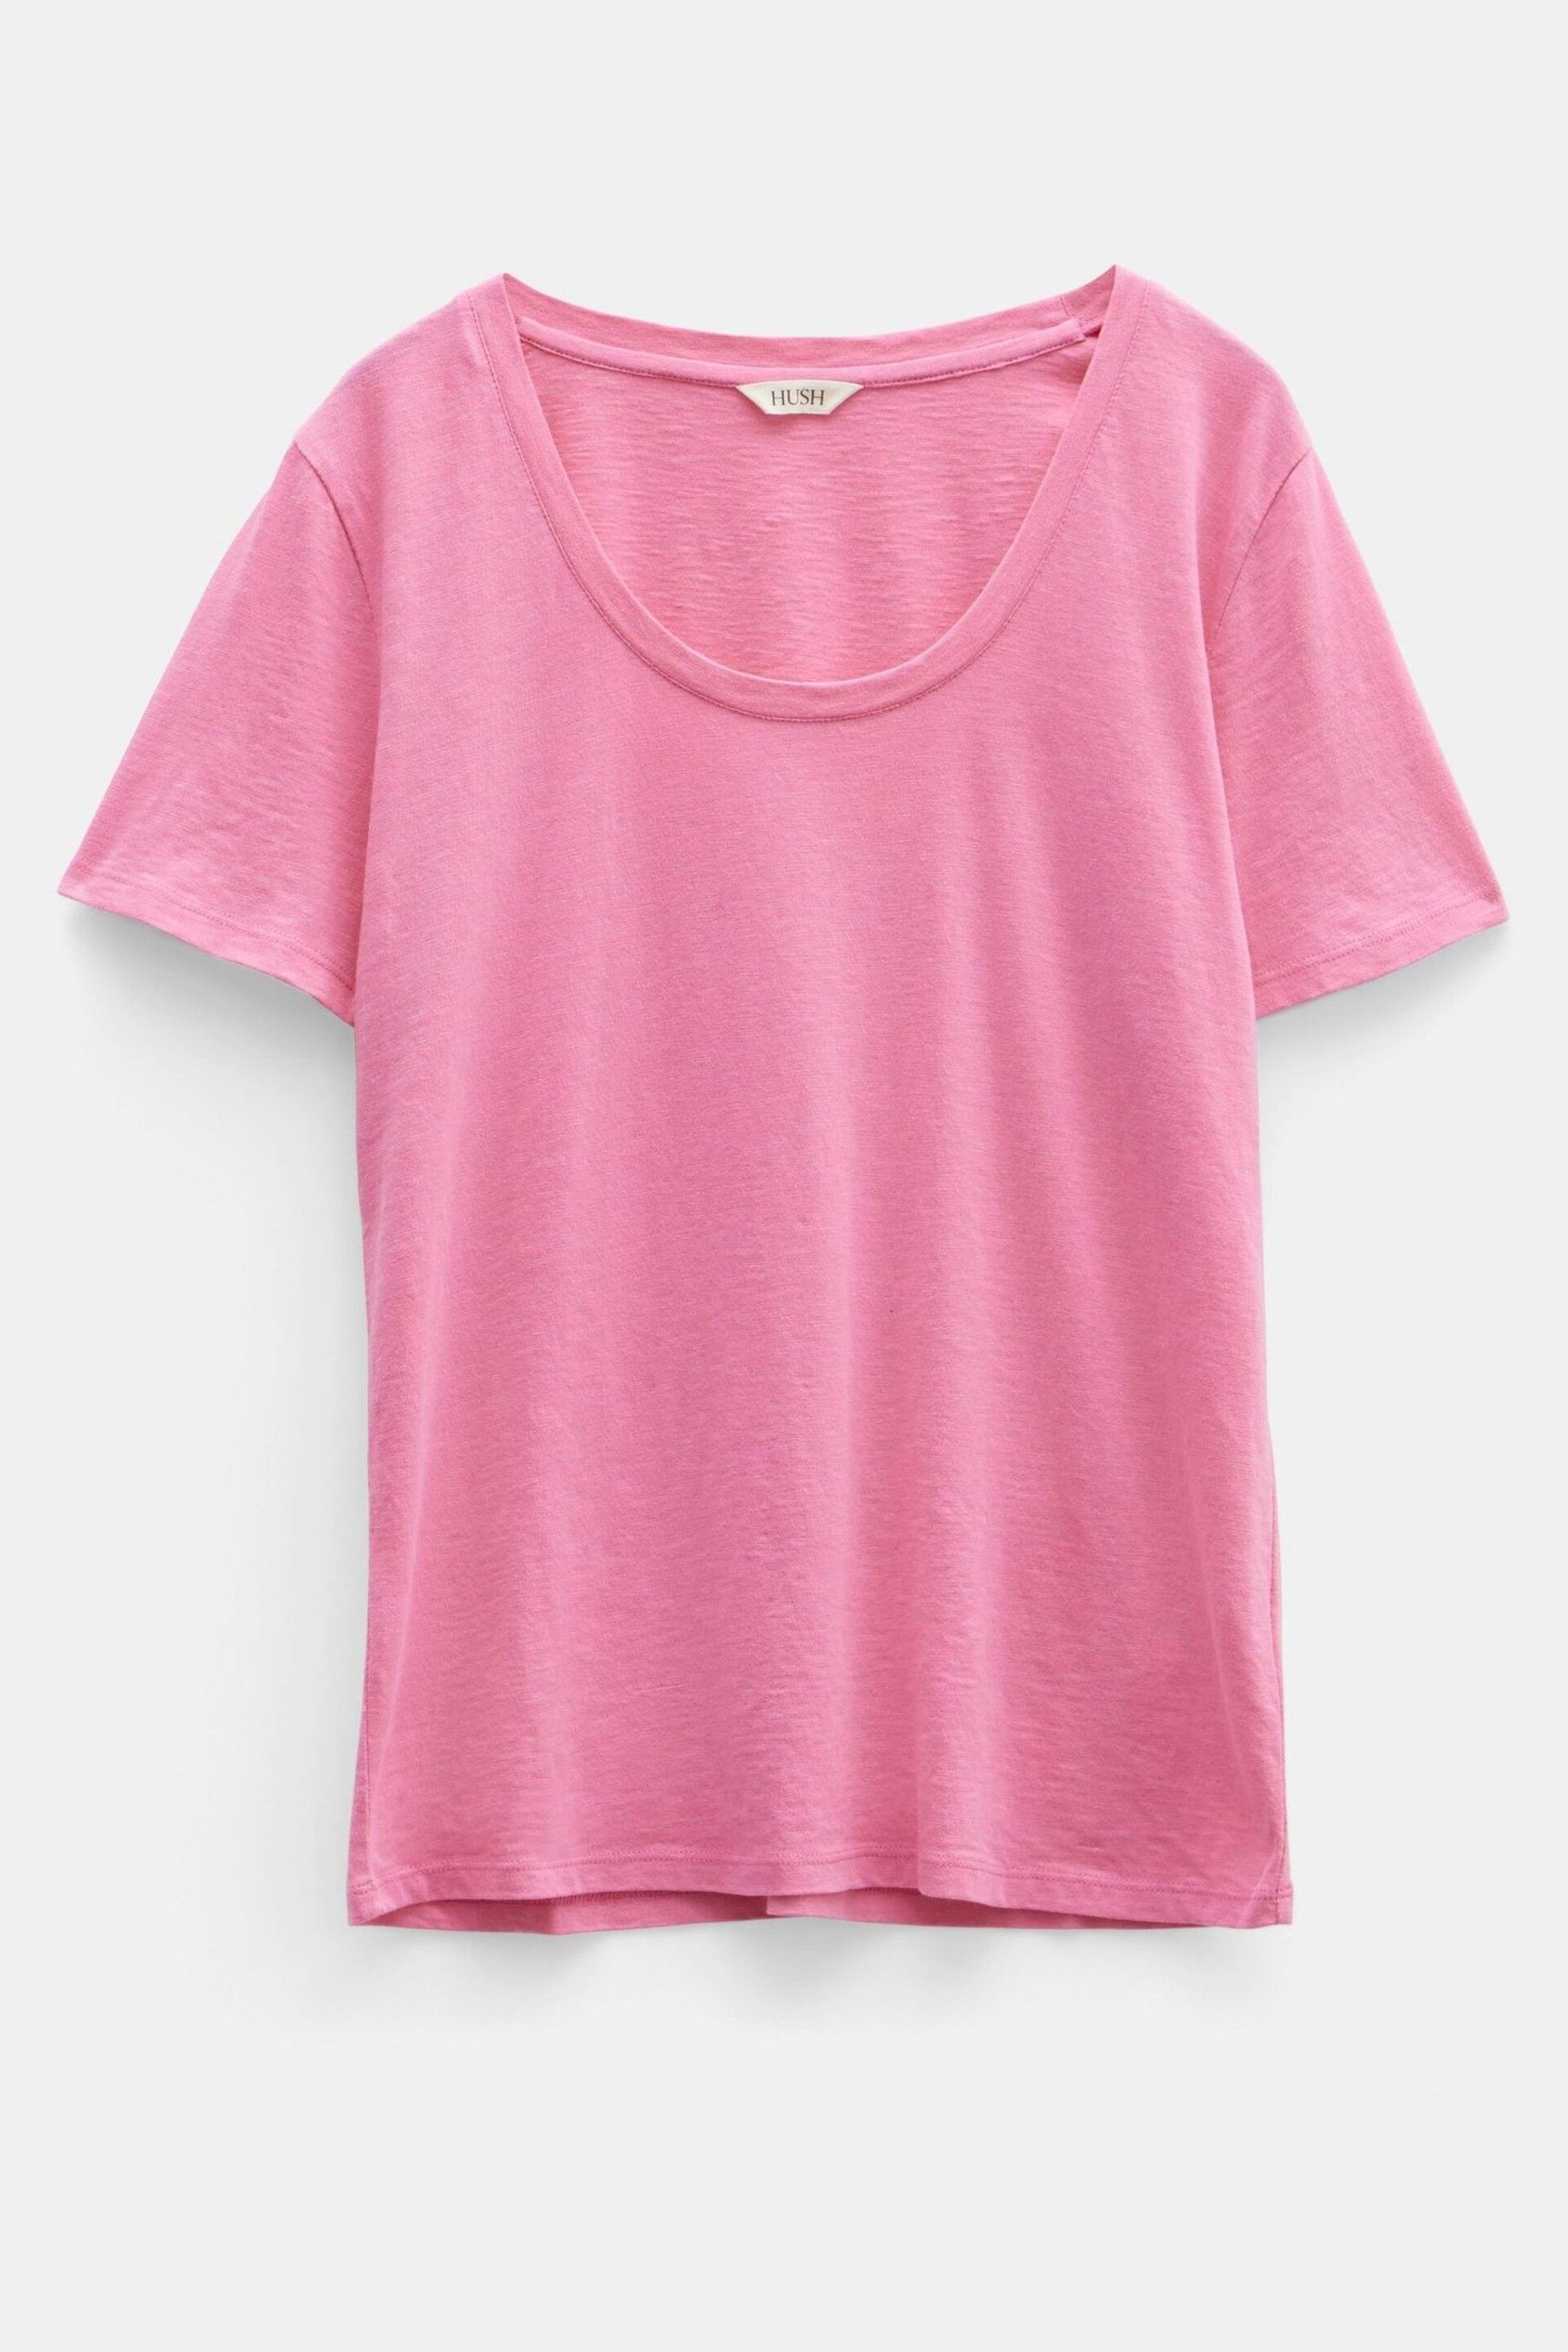 Hush Pink Hari Scoop Neck Cotton Slub T-Shirt - Image 5 of 5